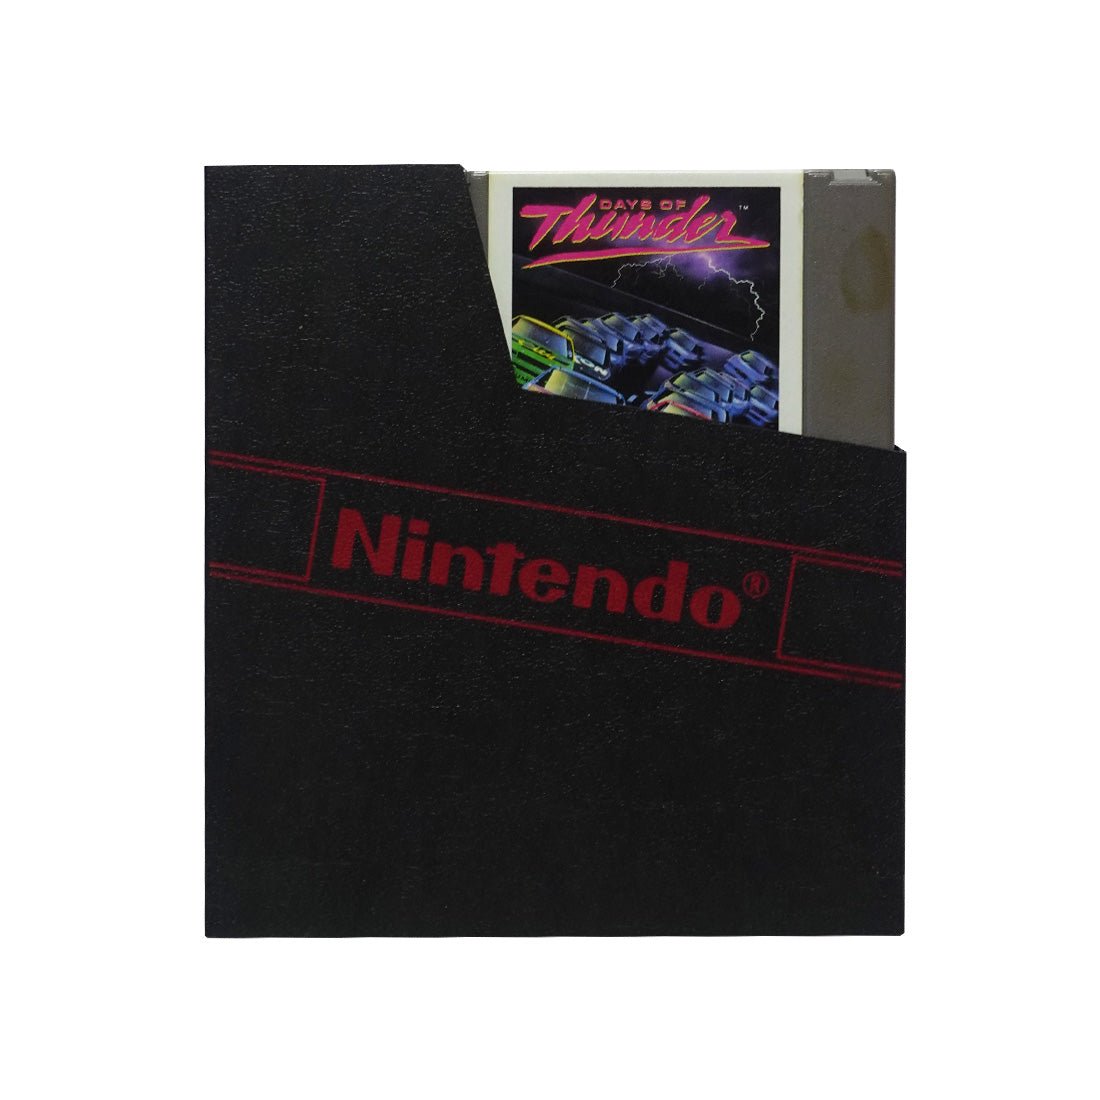 (Pre-Owned) Days of Thunder - Nintendo Entertainment System - ريترو - Store 974 | ستور ٩٧٤